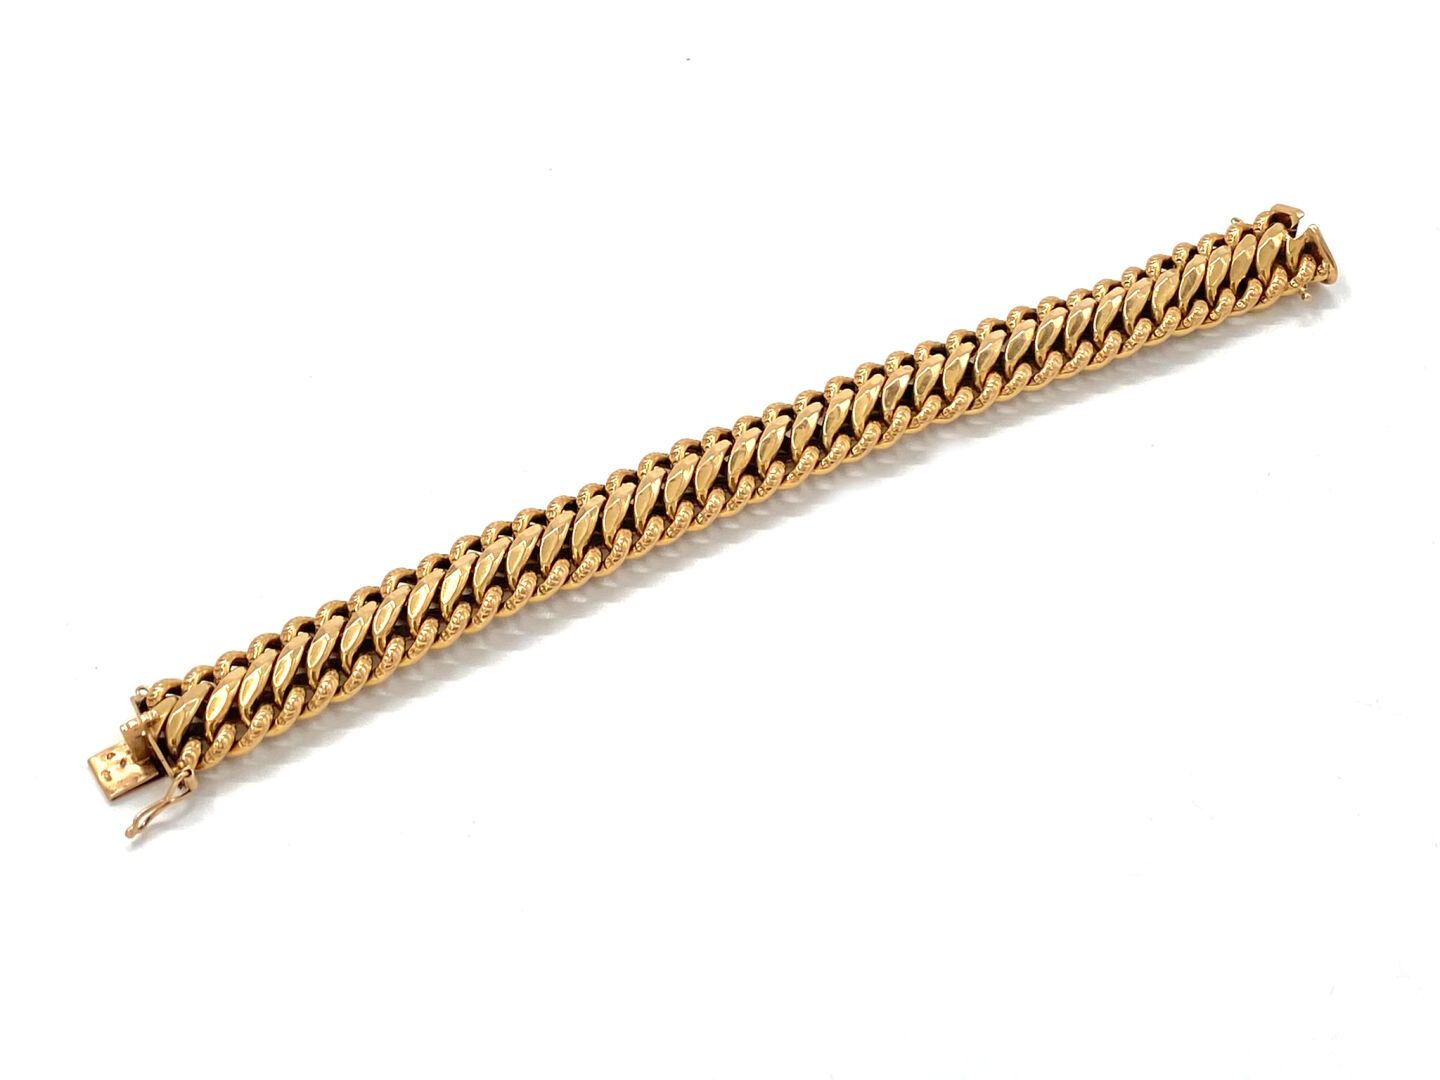 Null 黄金75万分之一的手镯，交错的链节上有平纹或刻纹。
长度：18,8 cm
毛重 : 38,1 g